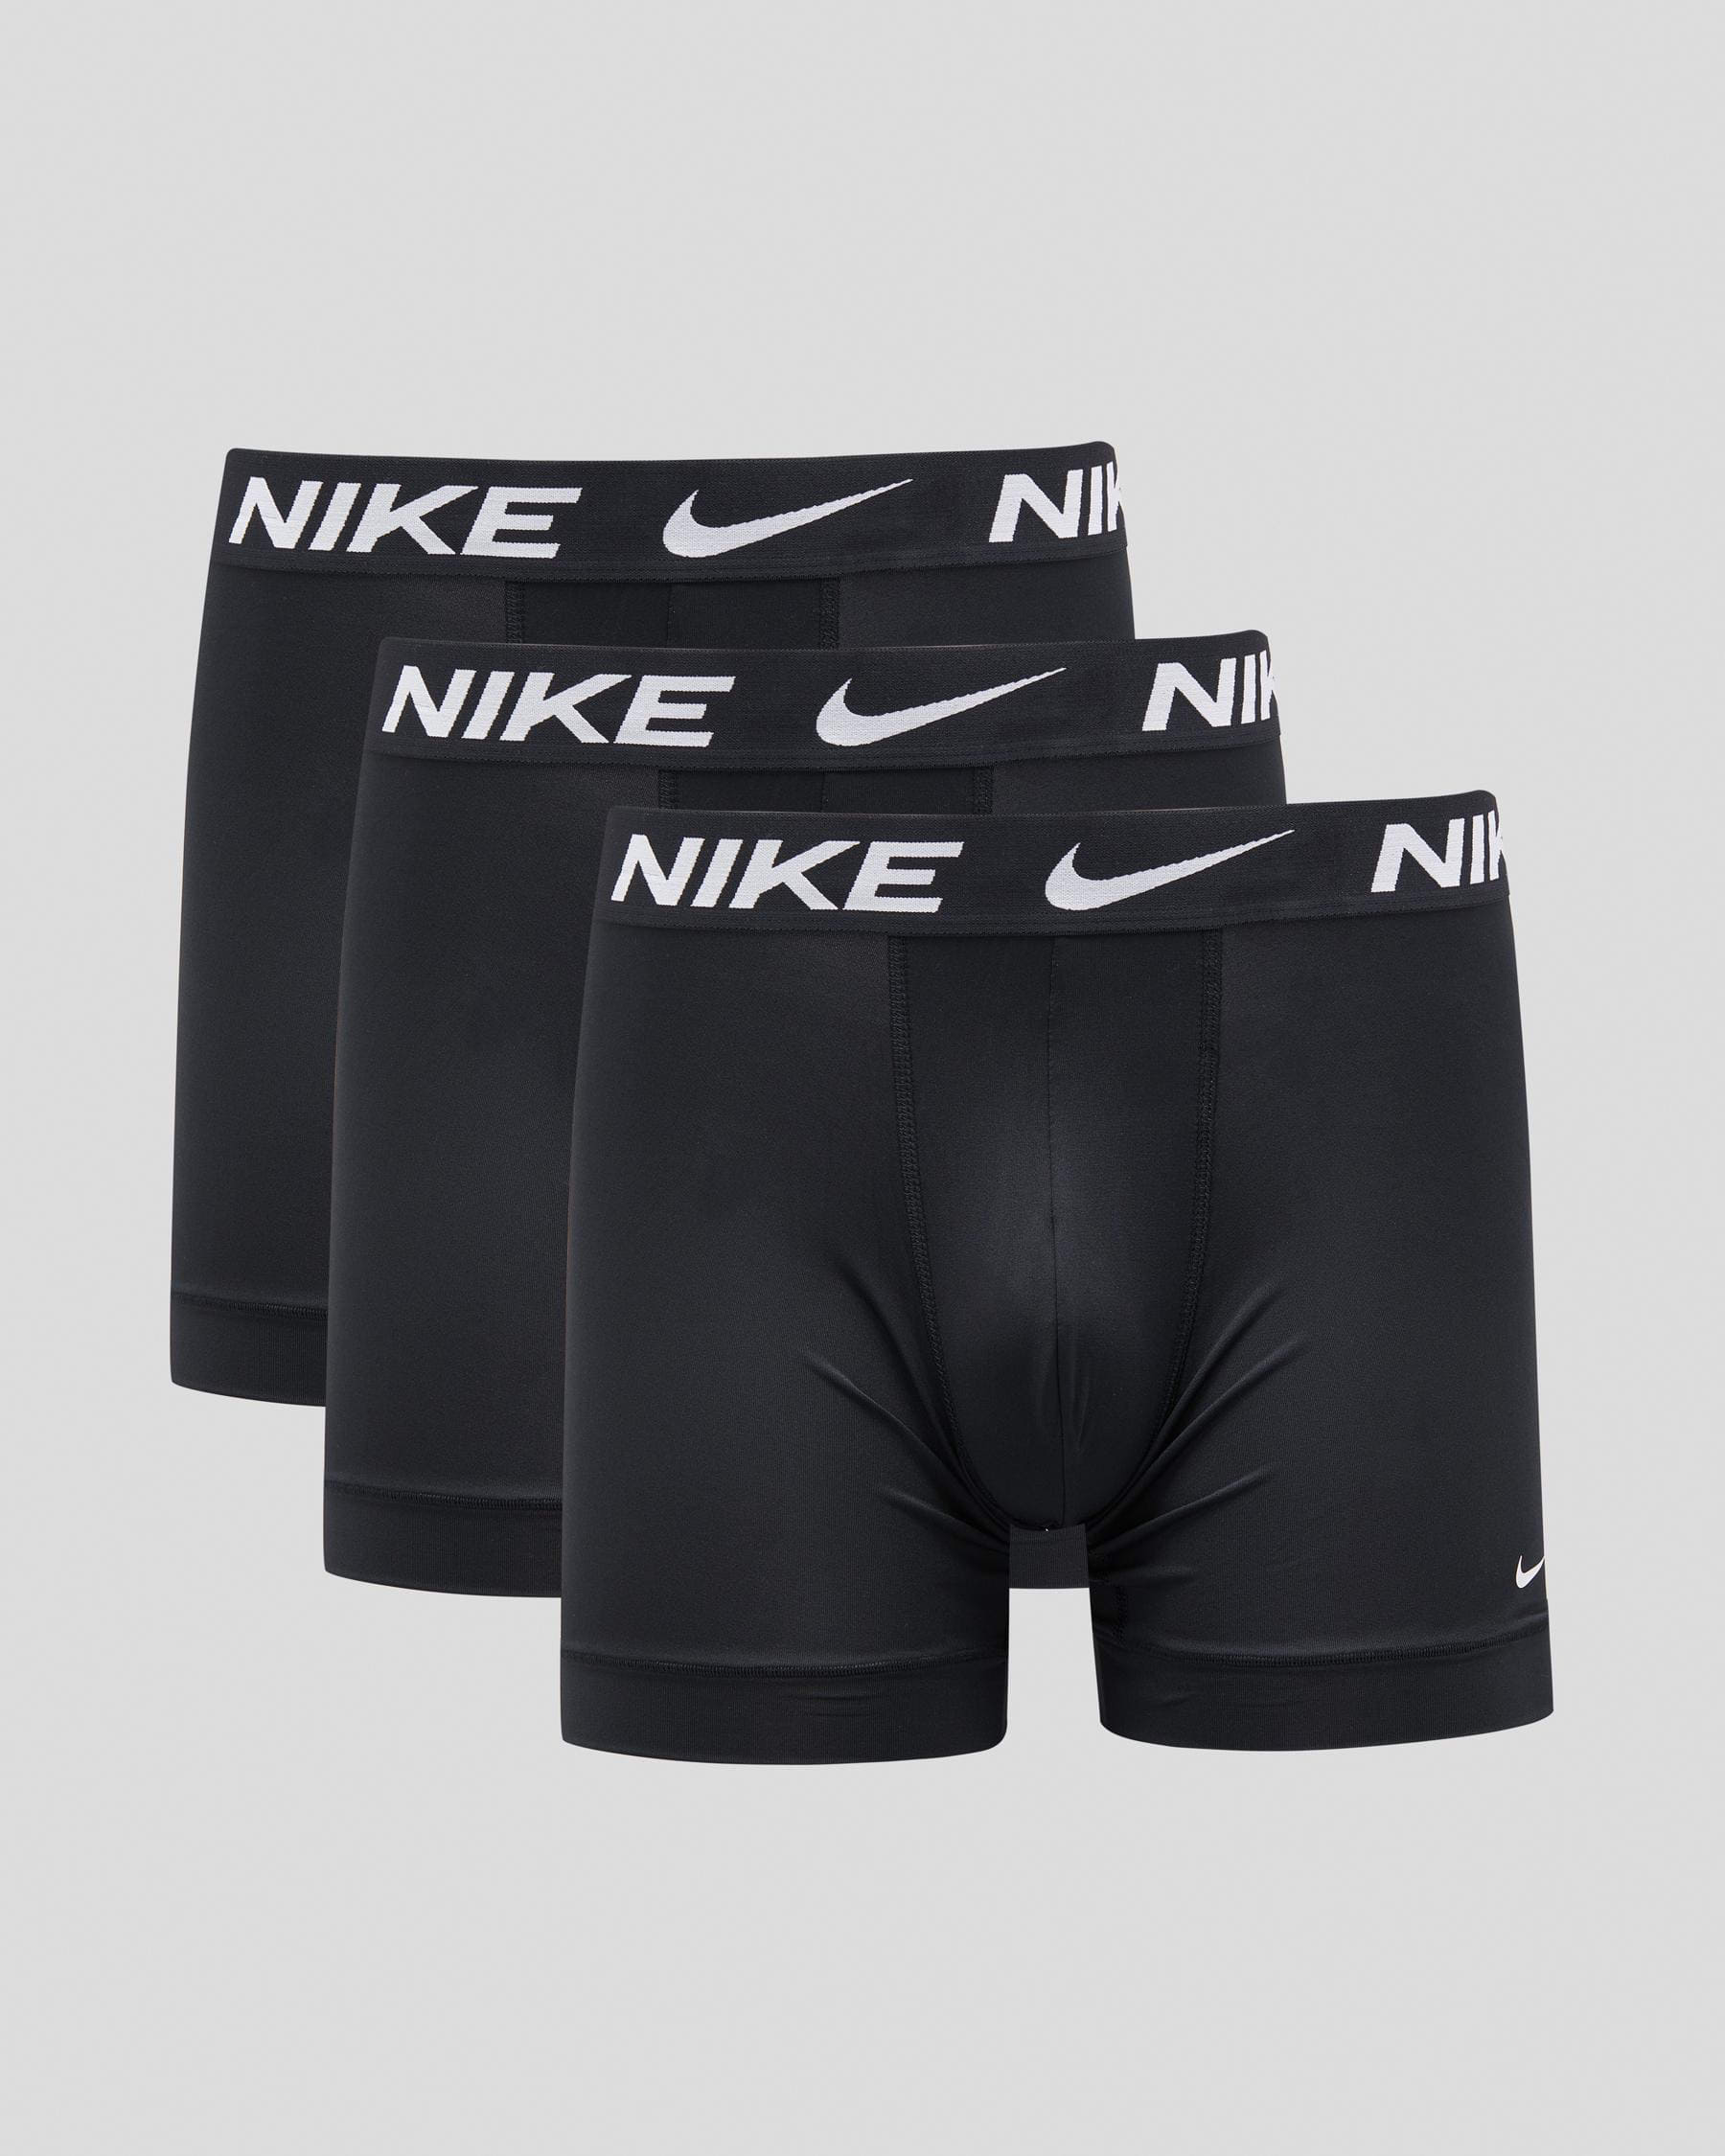 Nike Essential Micro Boxer Brief In Black/black/black - Fast Shipping ...